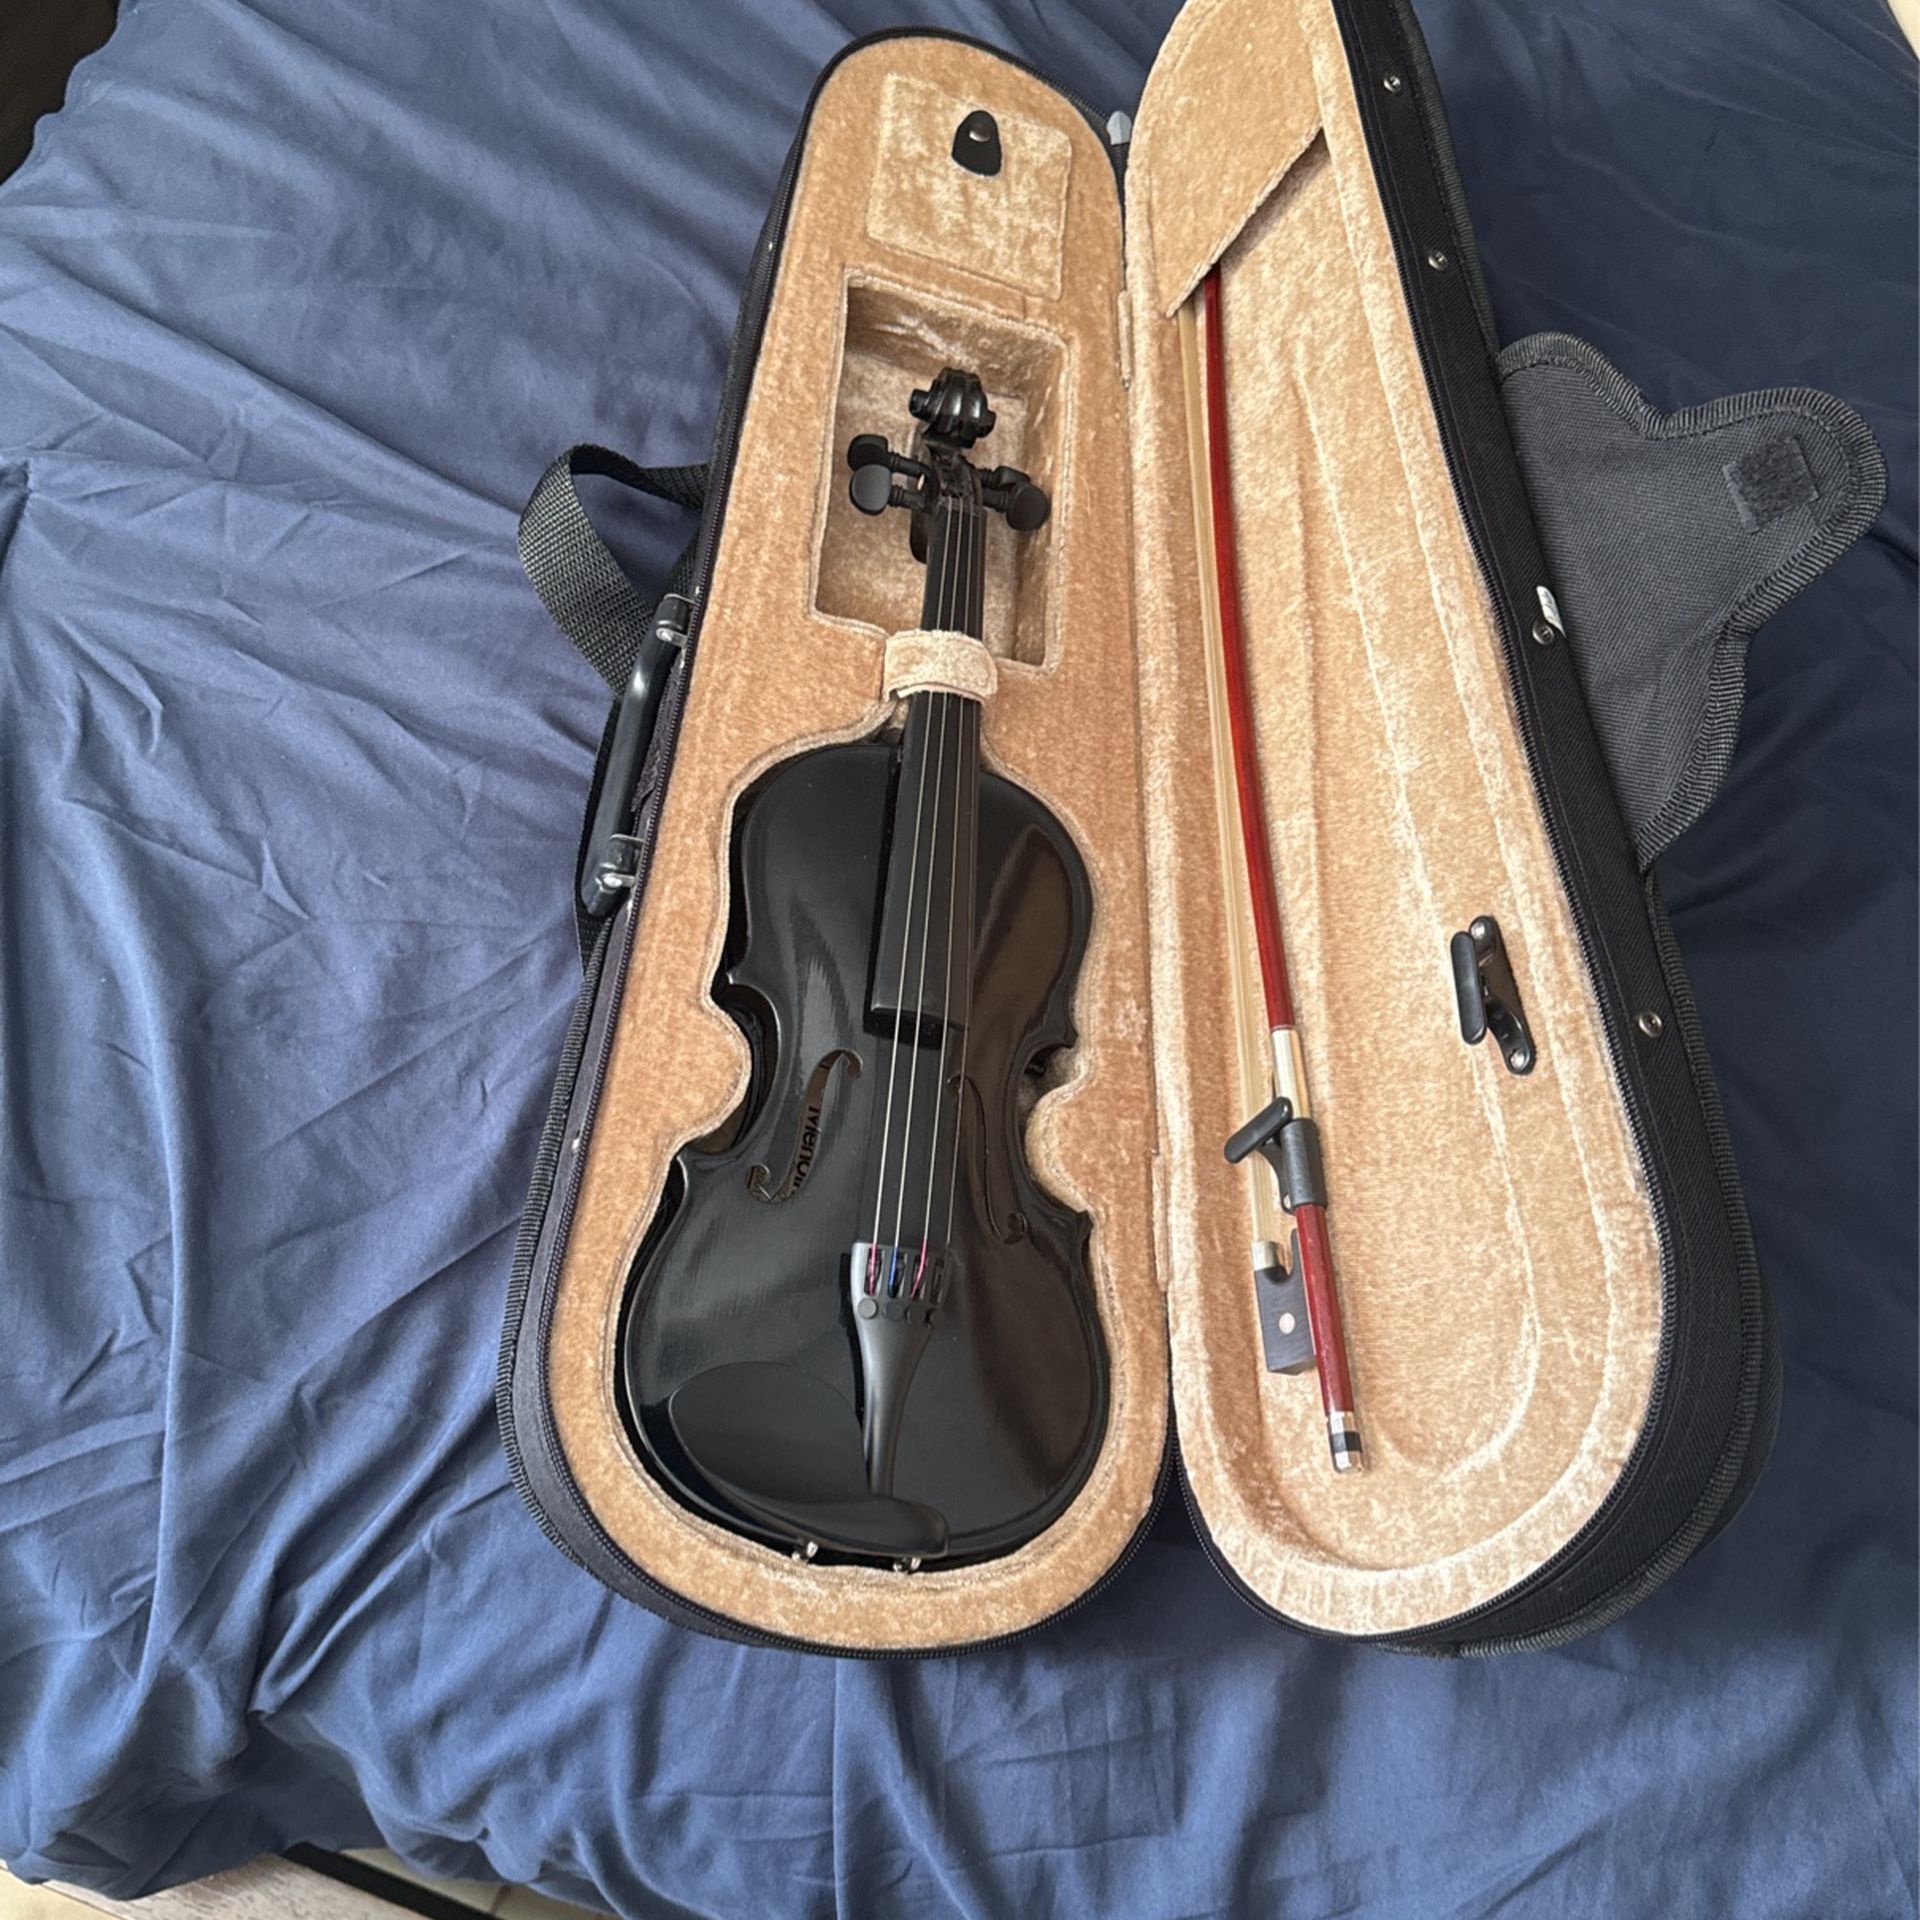 1/8 Violin, used, good condition